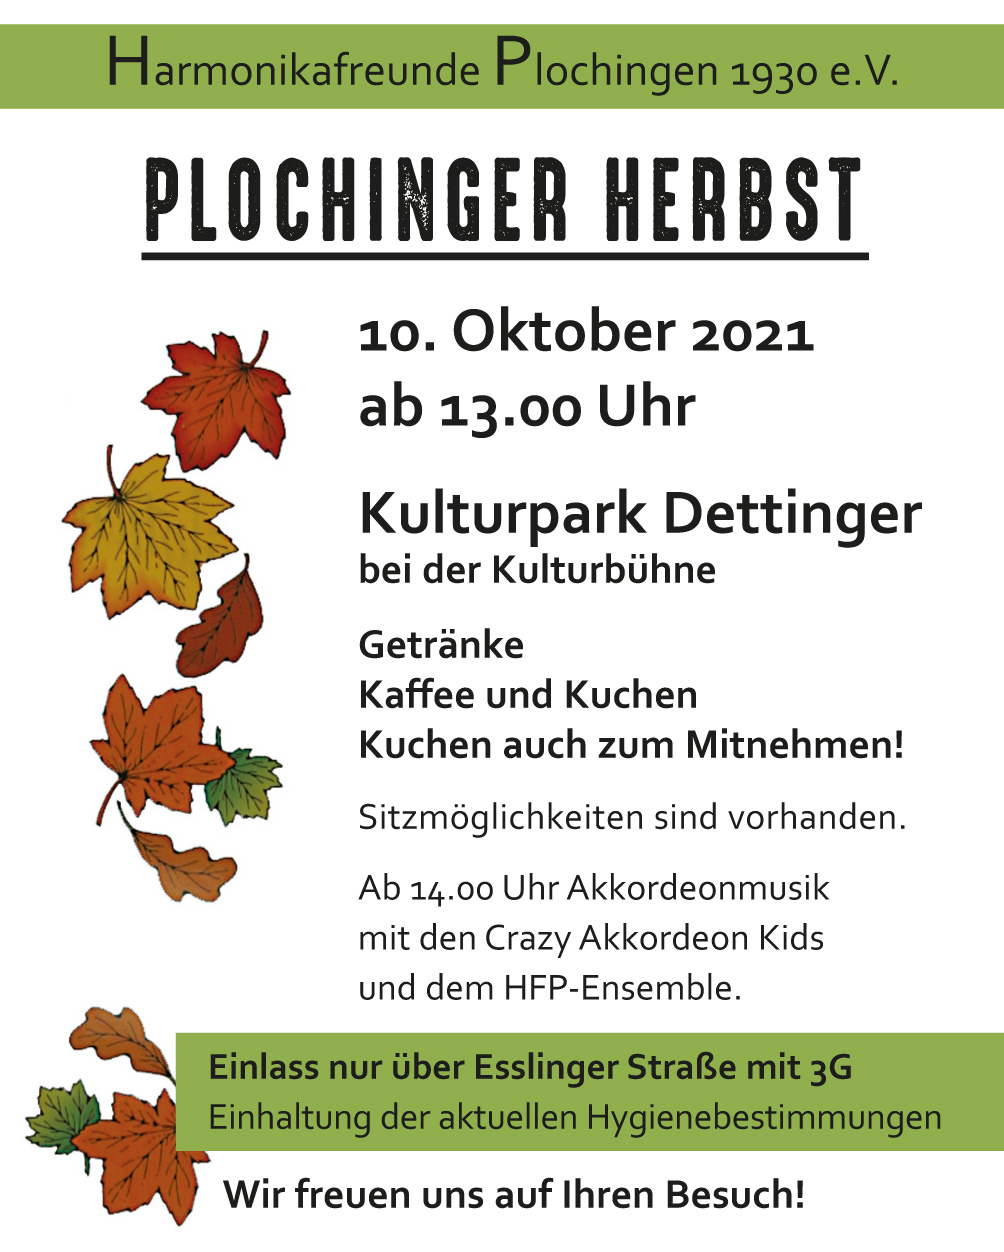 Plochinger Herbst